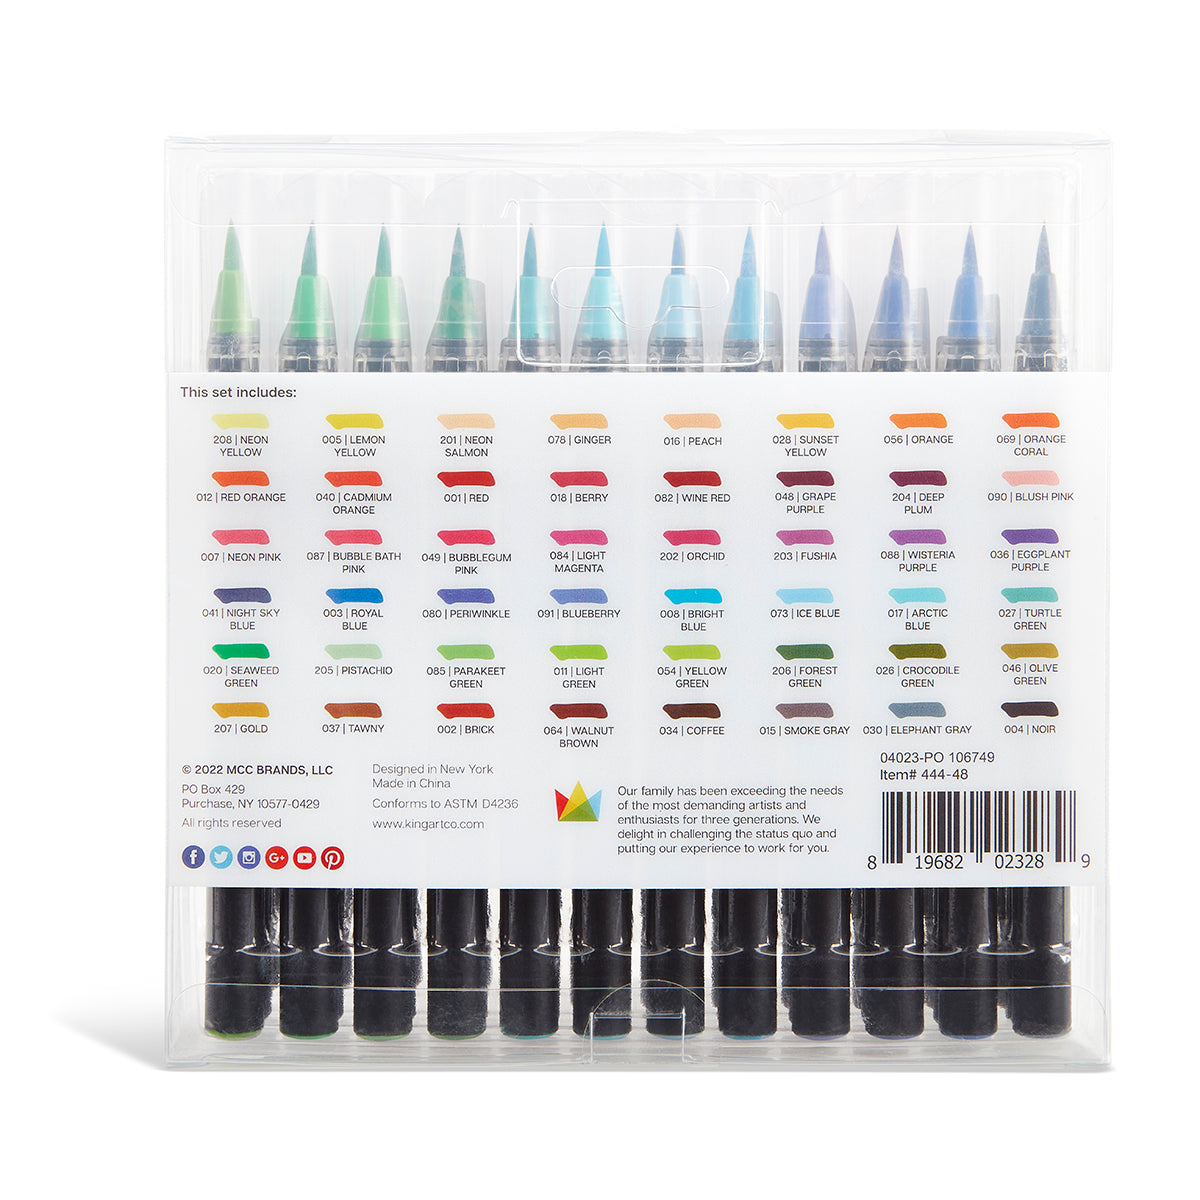 KingArt kingart pro dual twin-tip brush pens, set of 48 unique & vivid  colors, watercolor markers with flexible nylon brush tips, pro